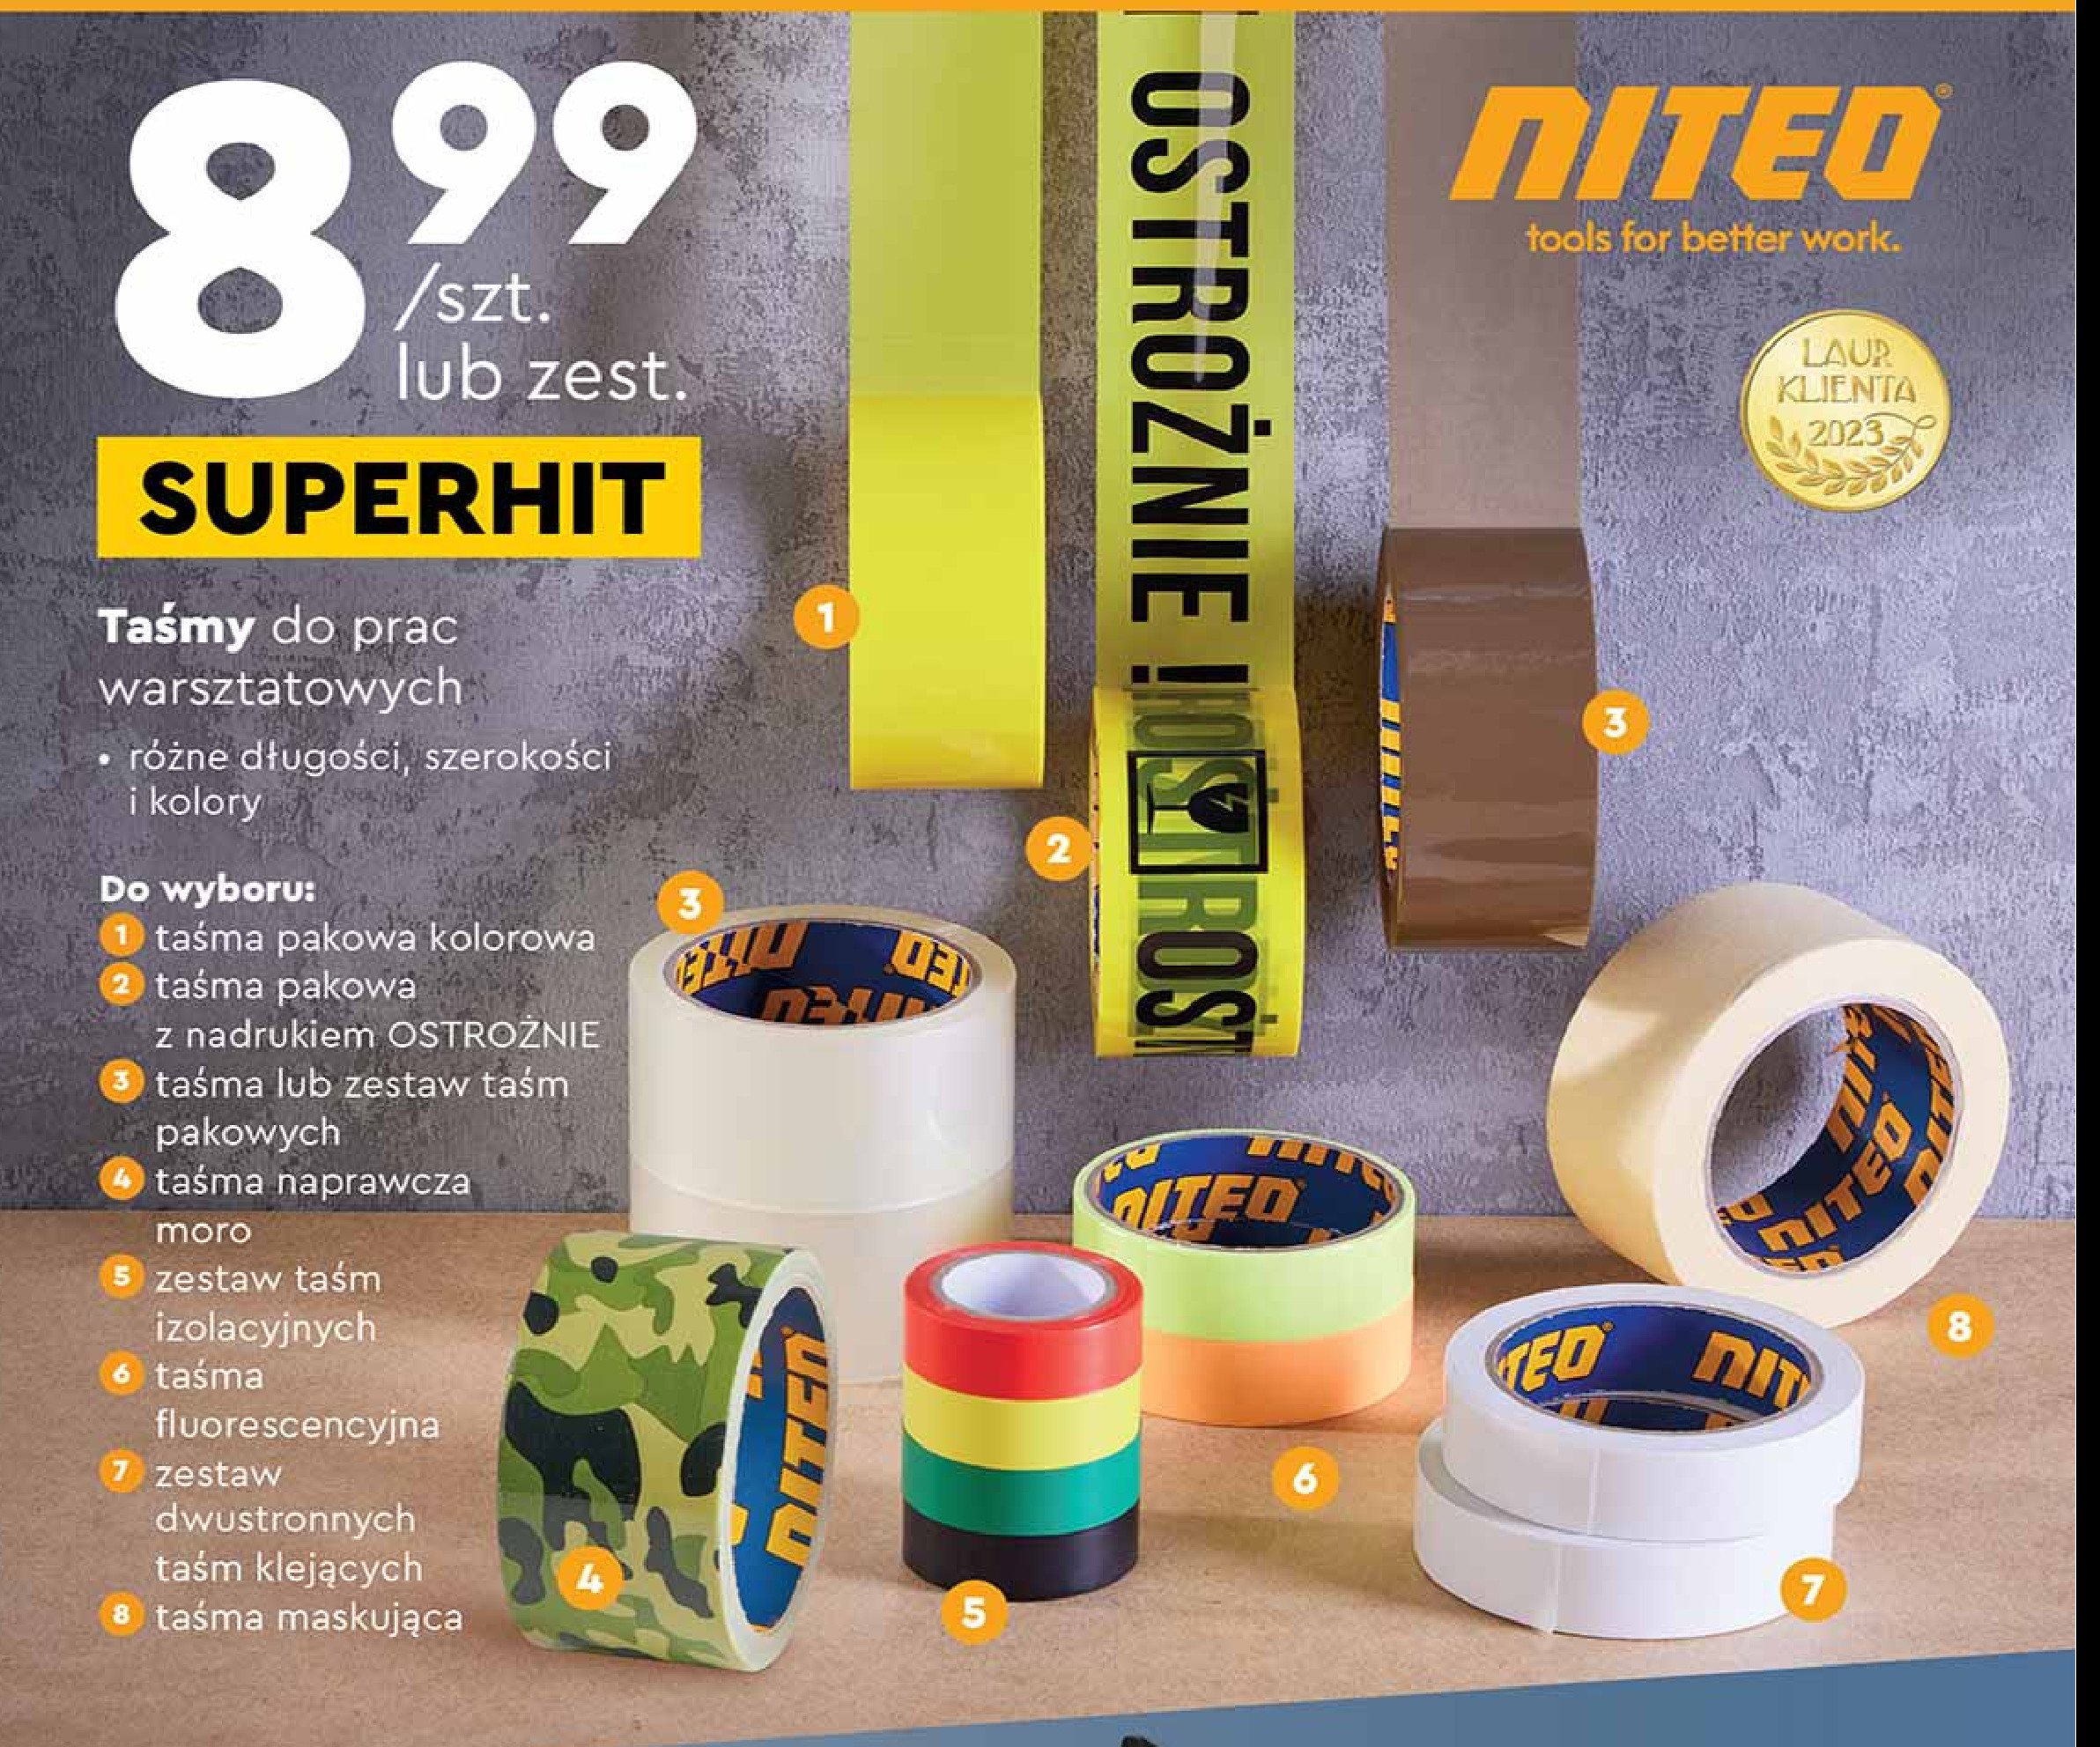 Taśma pakowa kolorowa Niteo tools promocja